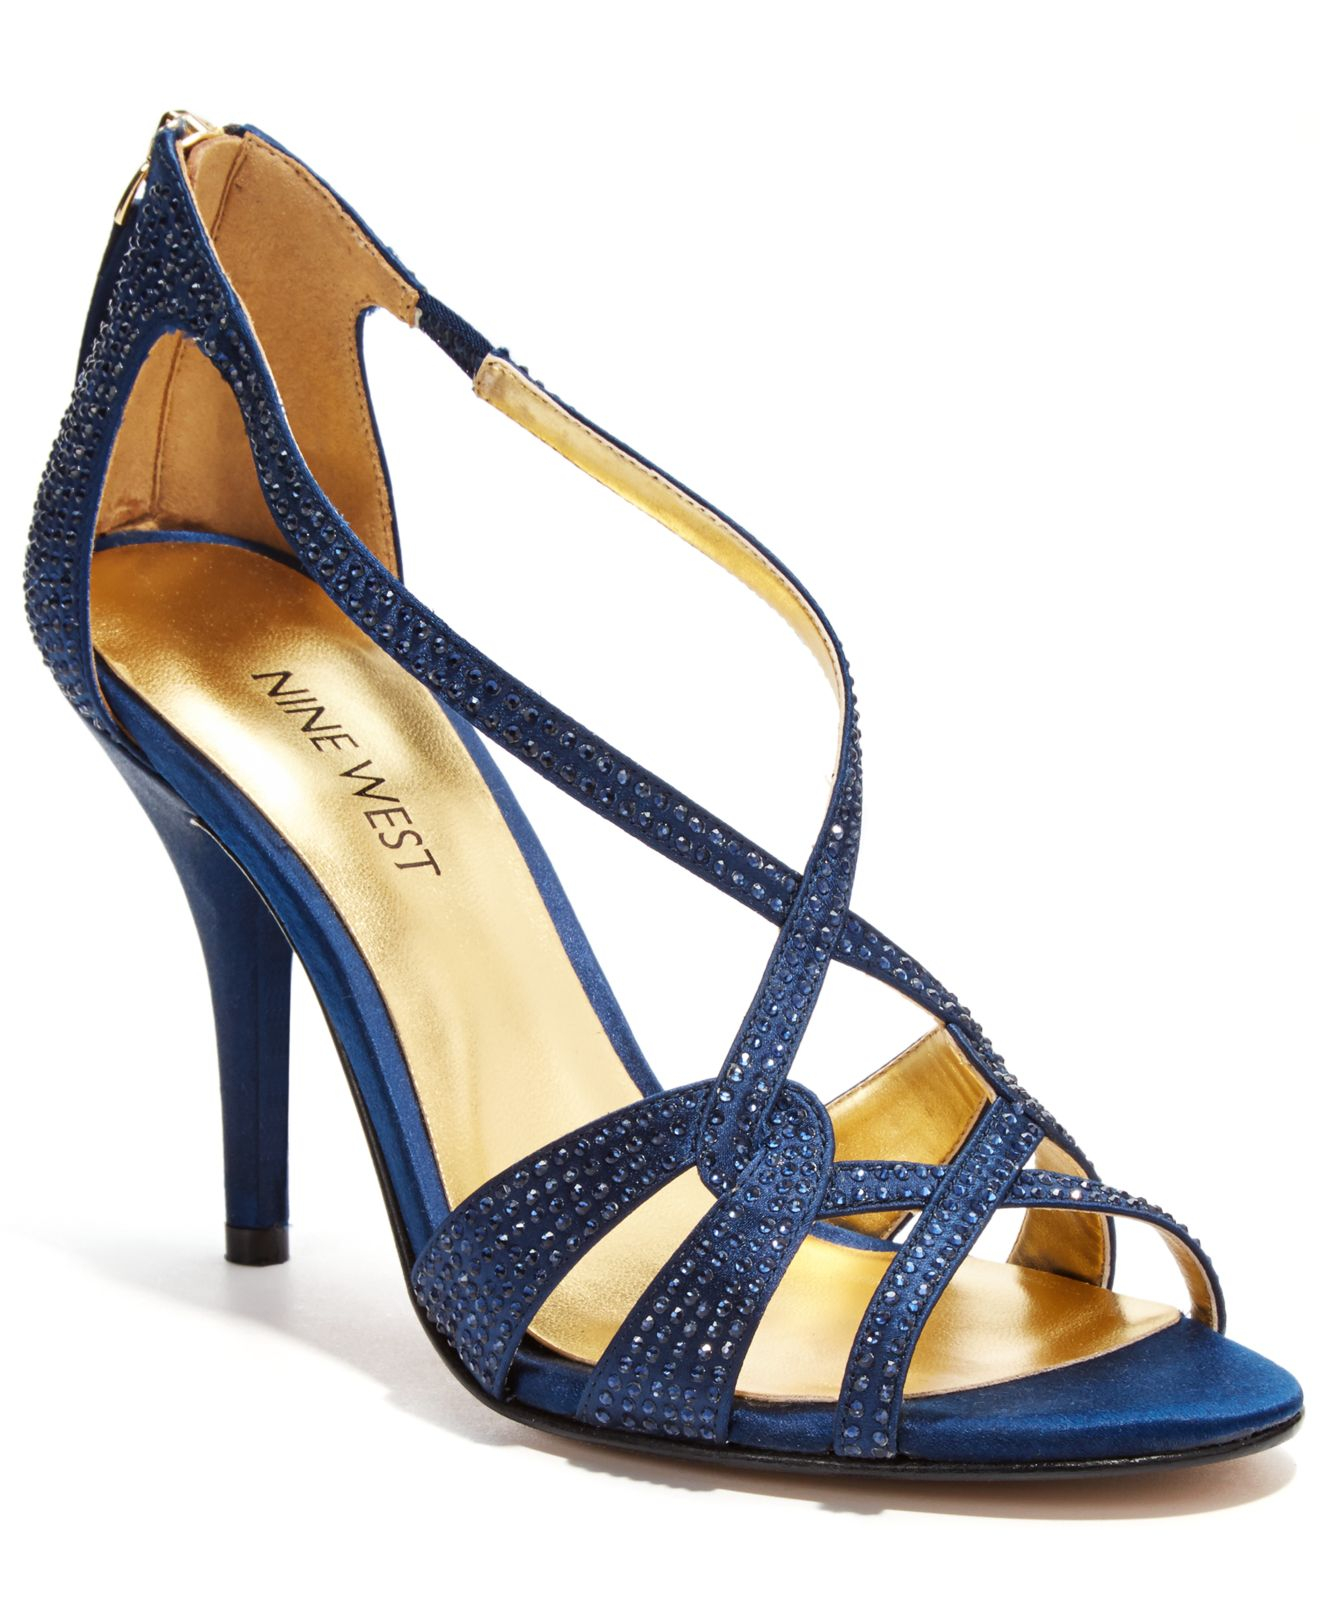 Lyst - Nine West Asvelia Mid Heel Evening Sandals in Blue